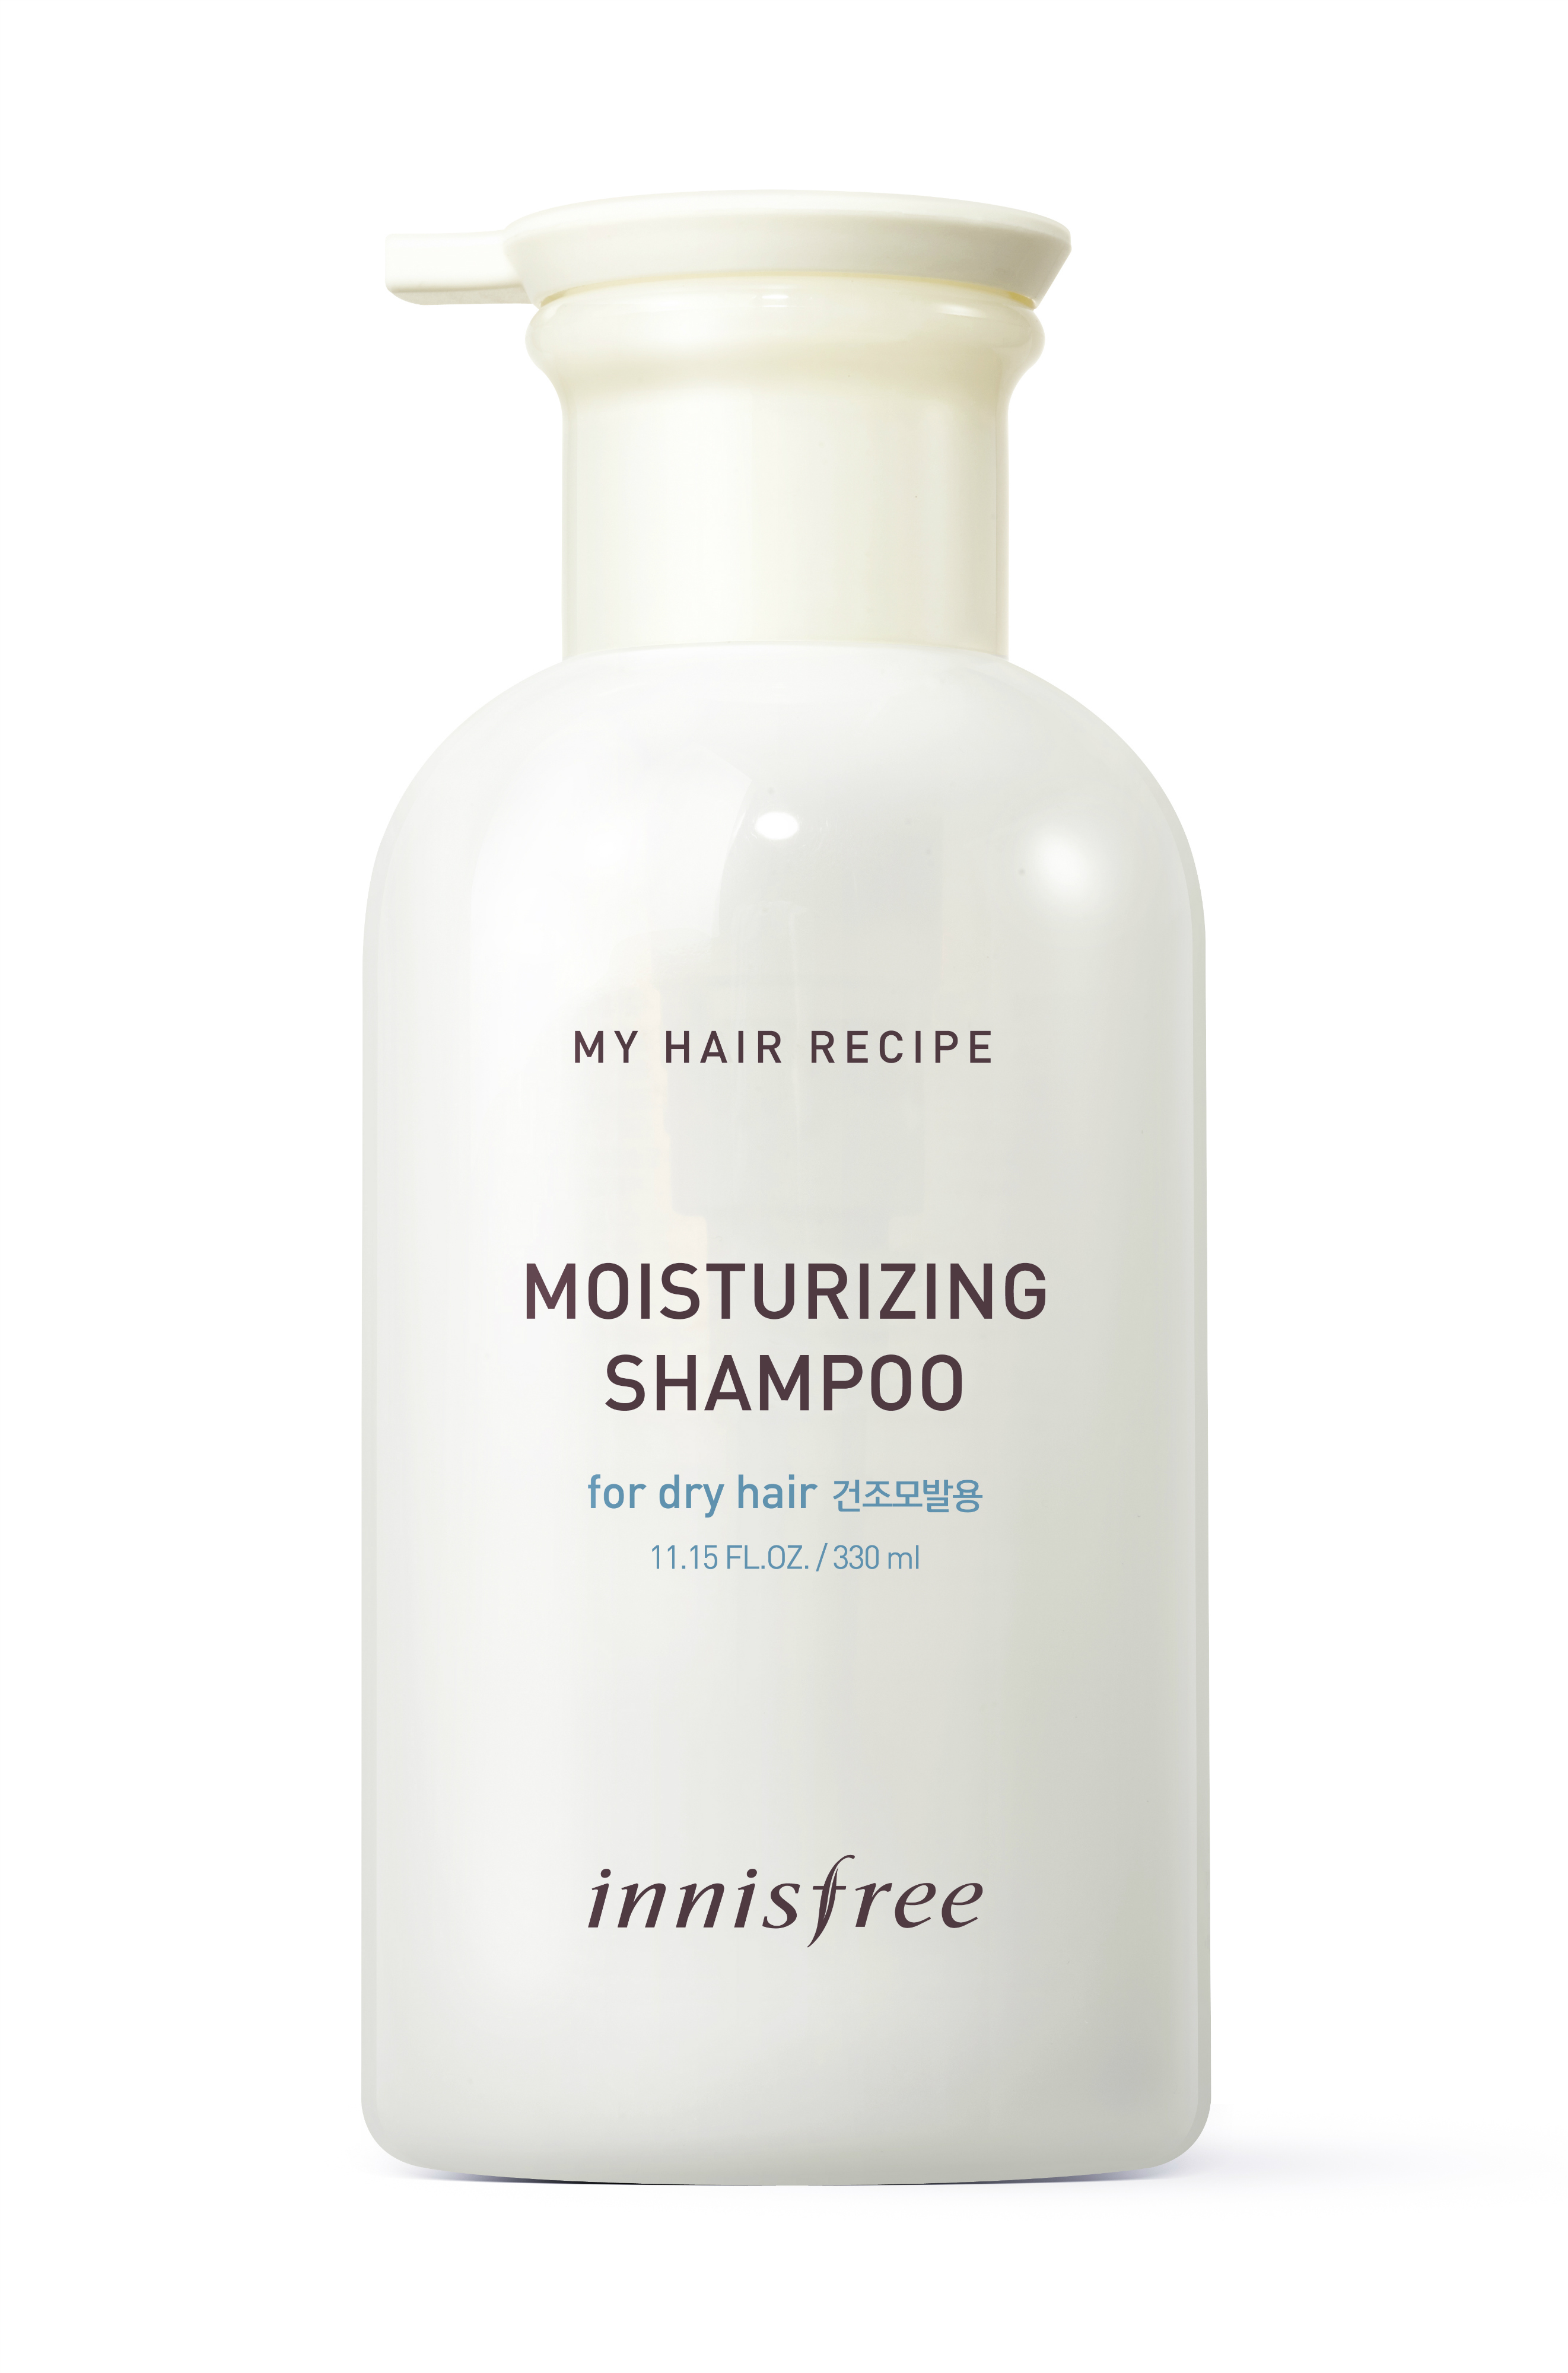 innisfree My Hair Recipe Moisturizing Shampoo (RM48.00/330ml)-Pamper.my